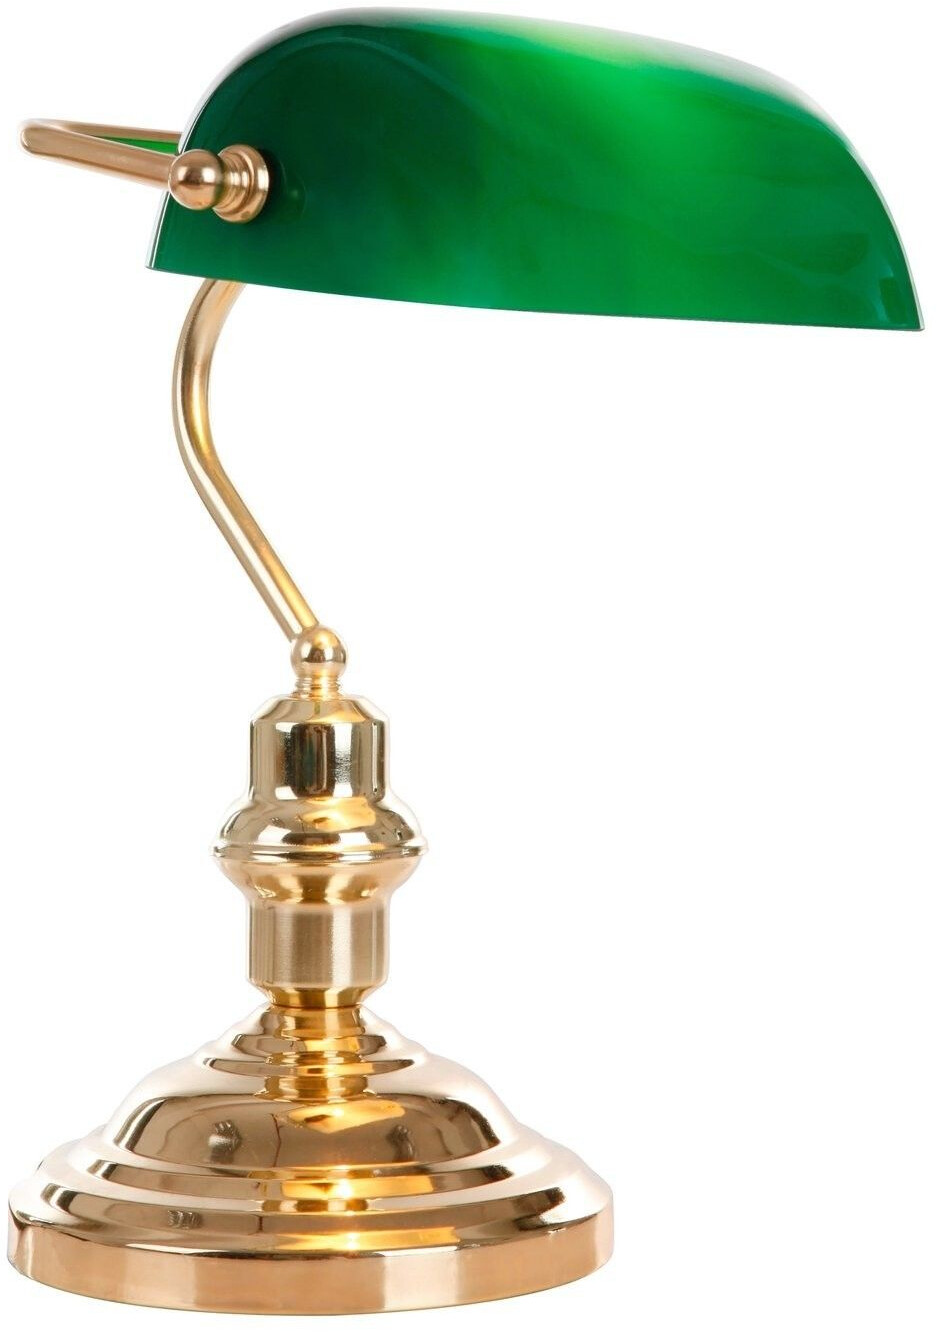 Настольные лампы с зеленым абажуром купить. Настольная лампа Globo Antique 2491. Настольная лампа Globo Lighting Antique 2491. Настольная лампа Globo 2491k. Светильник настольный Globo Antique 2491 зеленый.